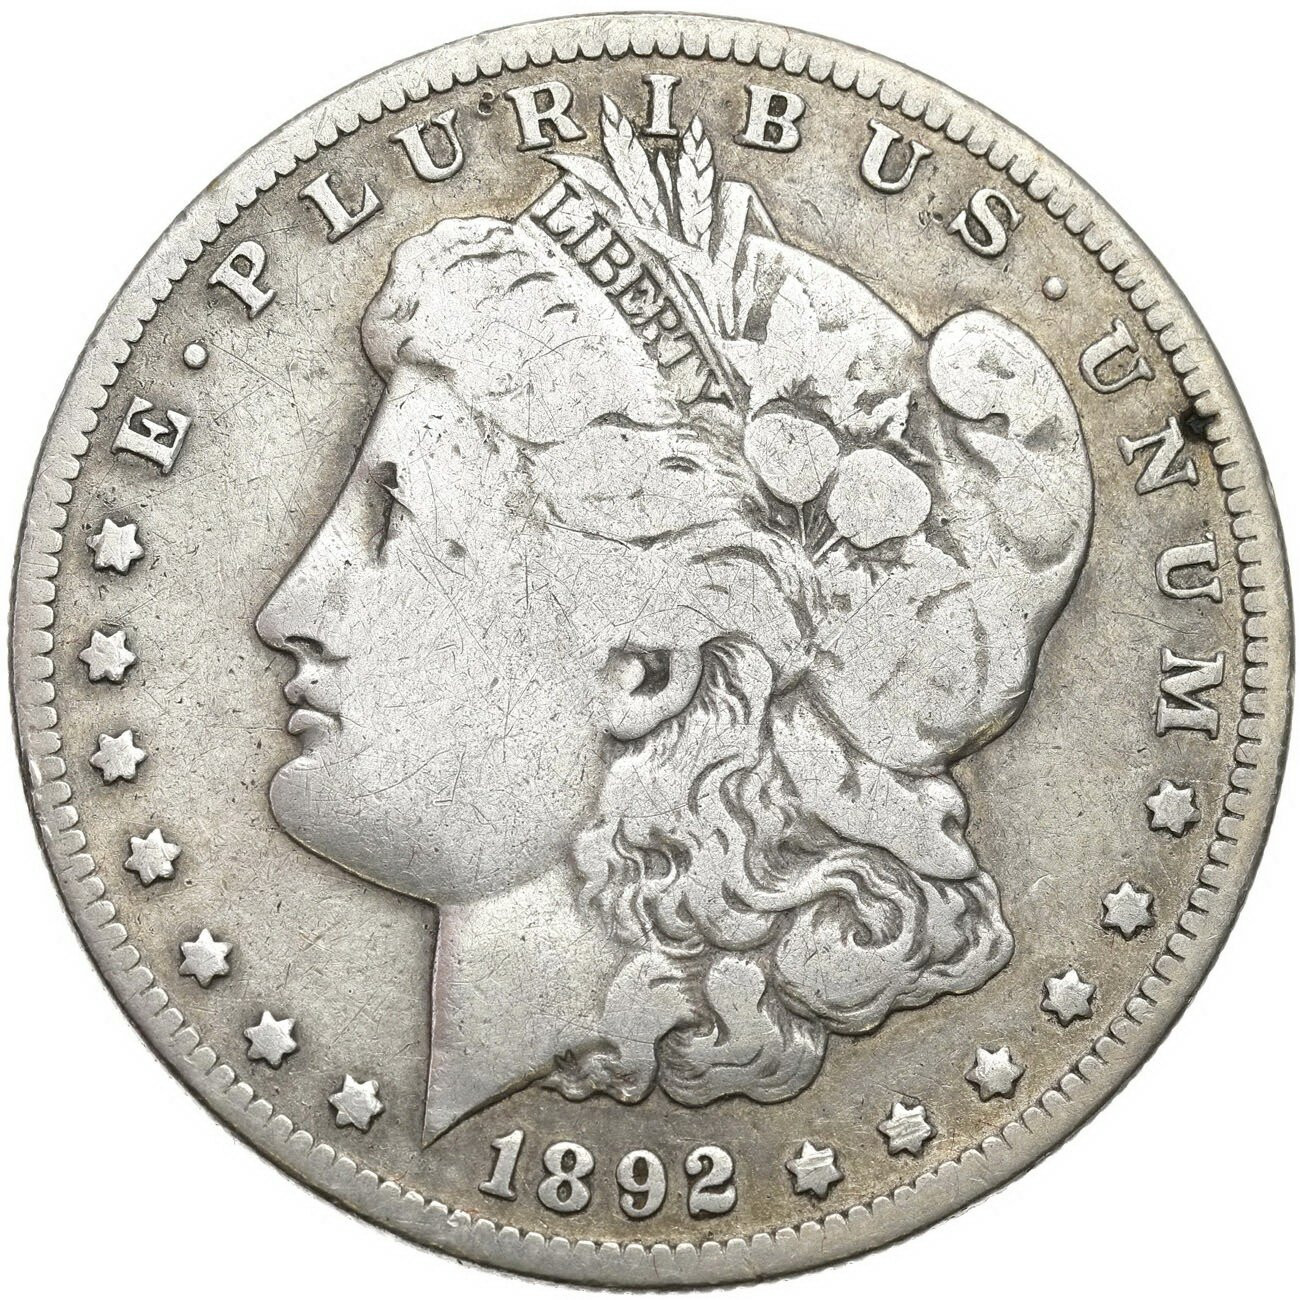 USA 1 dolar 1892 O, New Orleans 